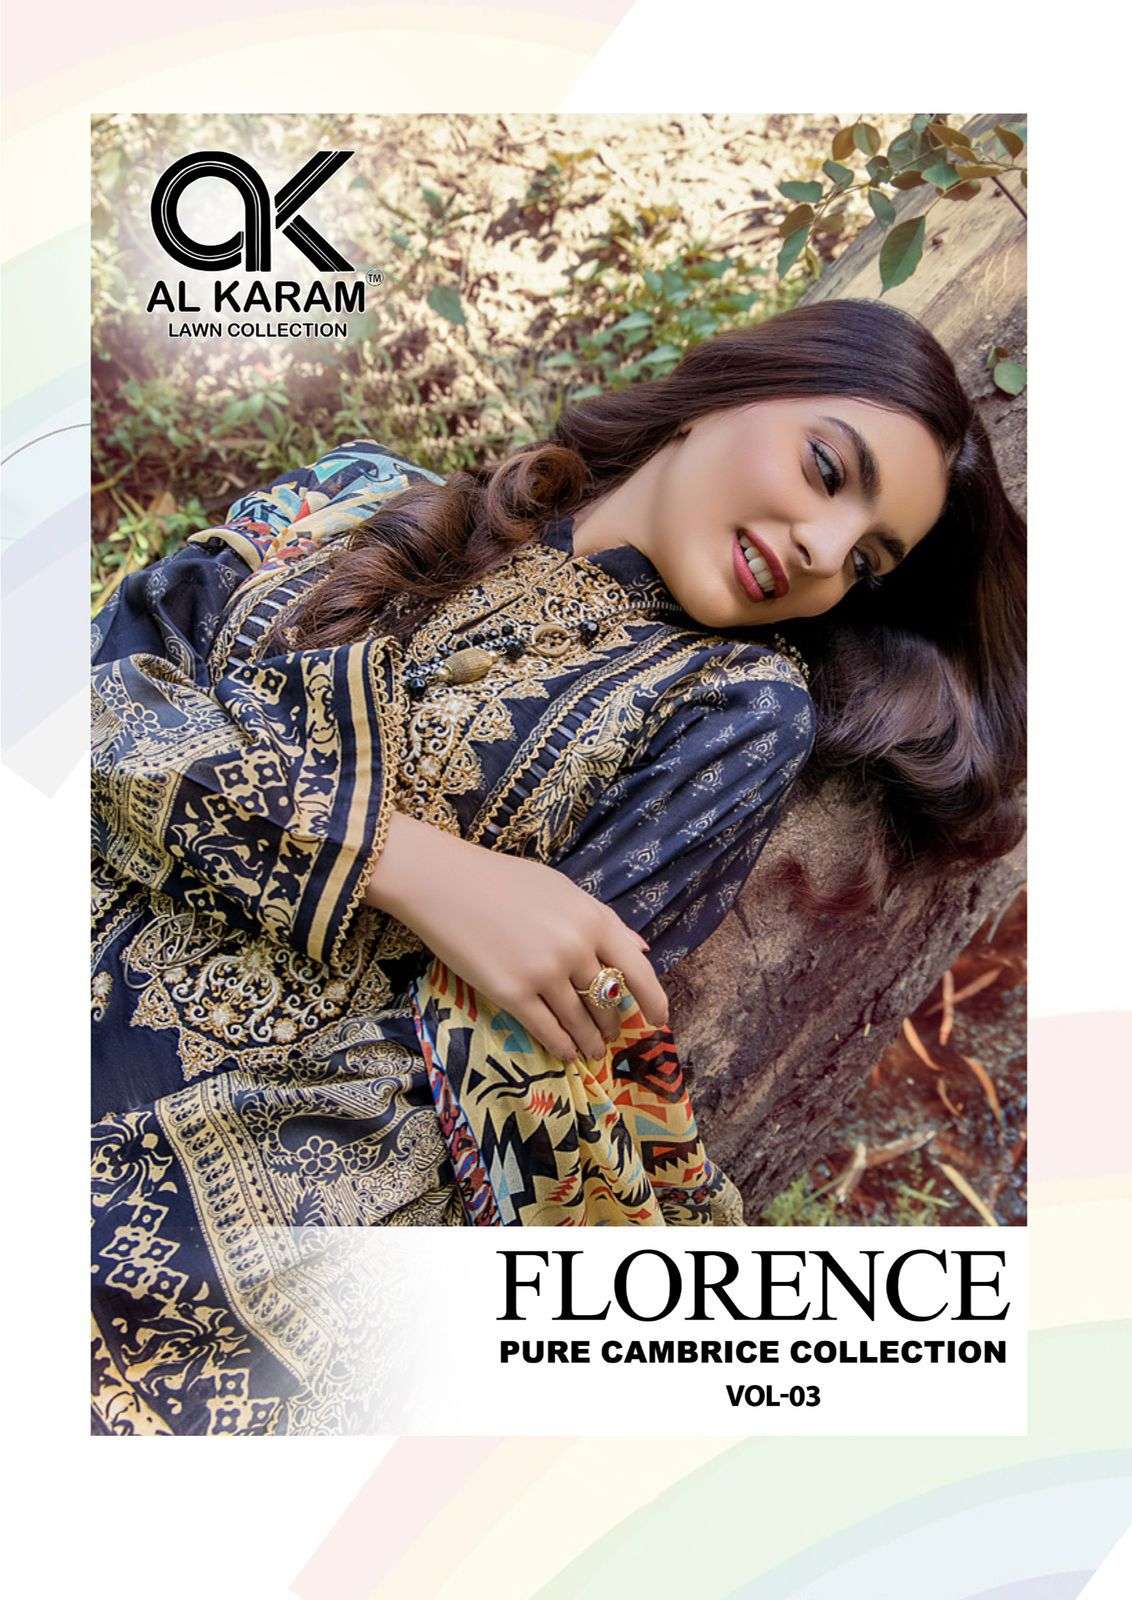 FLORENCE VOL-03 BY AL KARAM 1001 TO 1006 SERIES HEAVY COTTON PRINT DRESSES